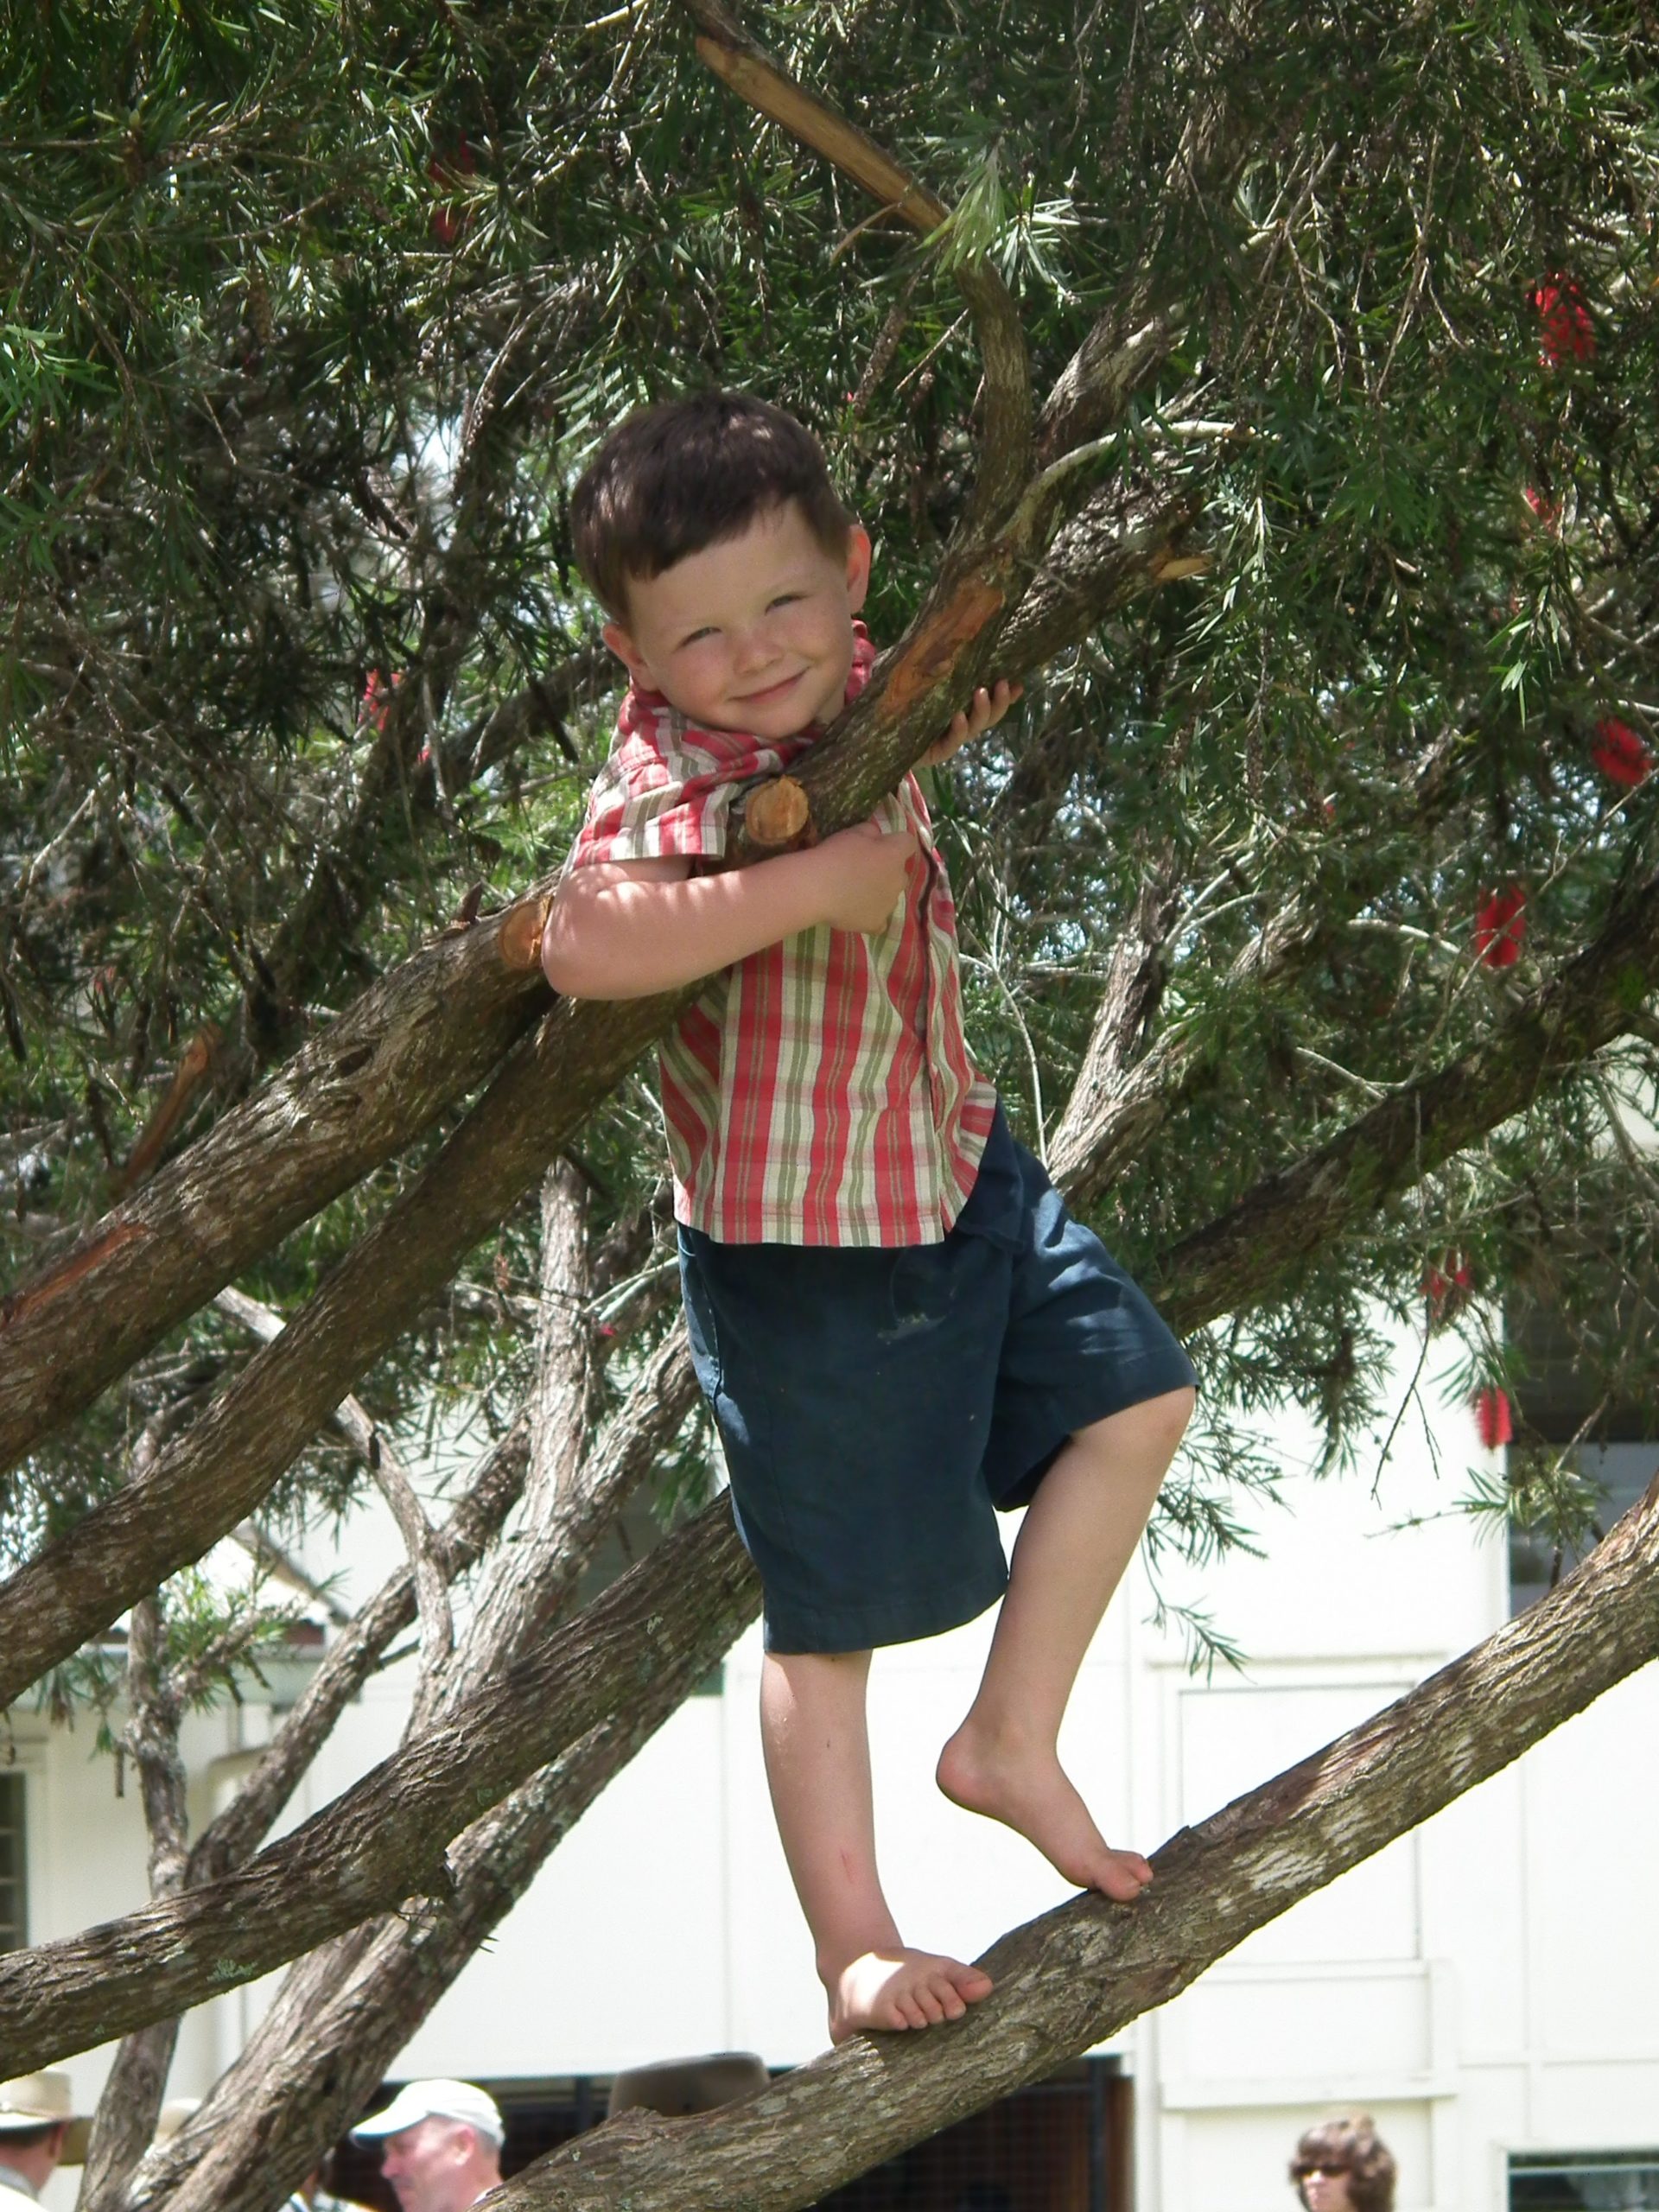 Joshua, barefoot, climbs a tree